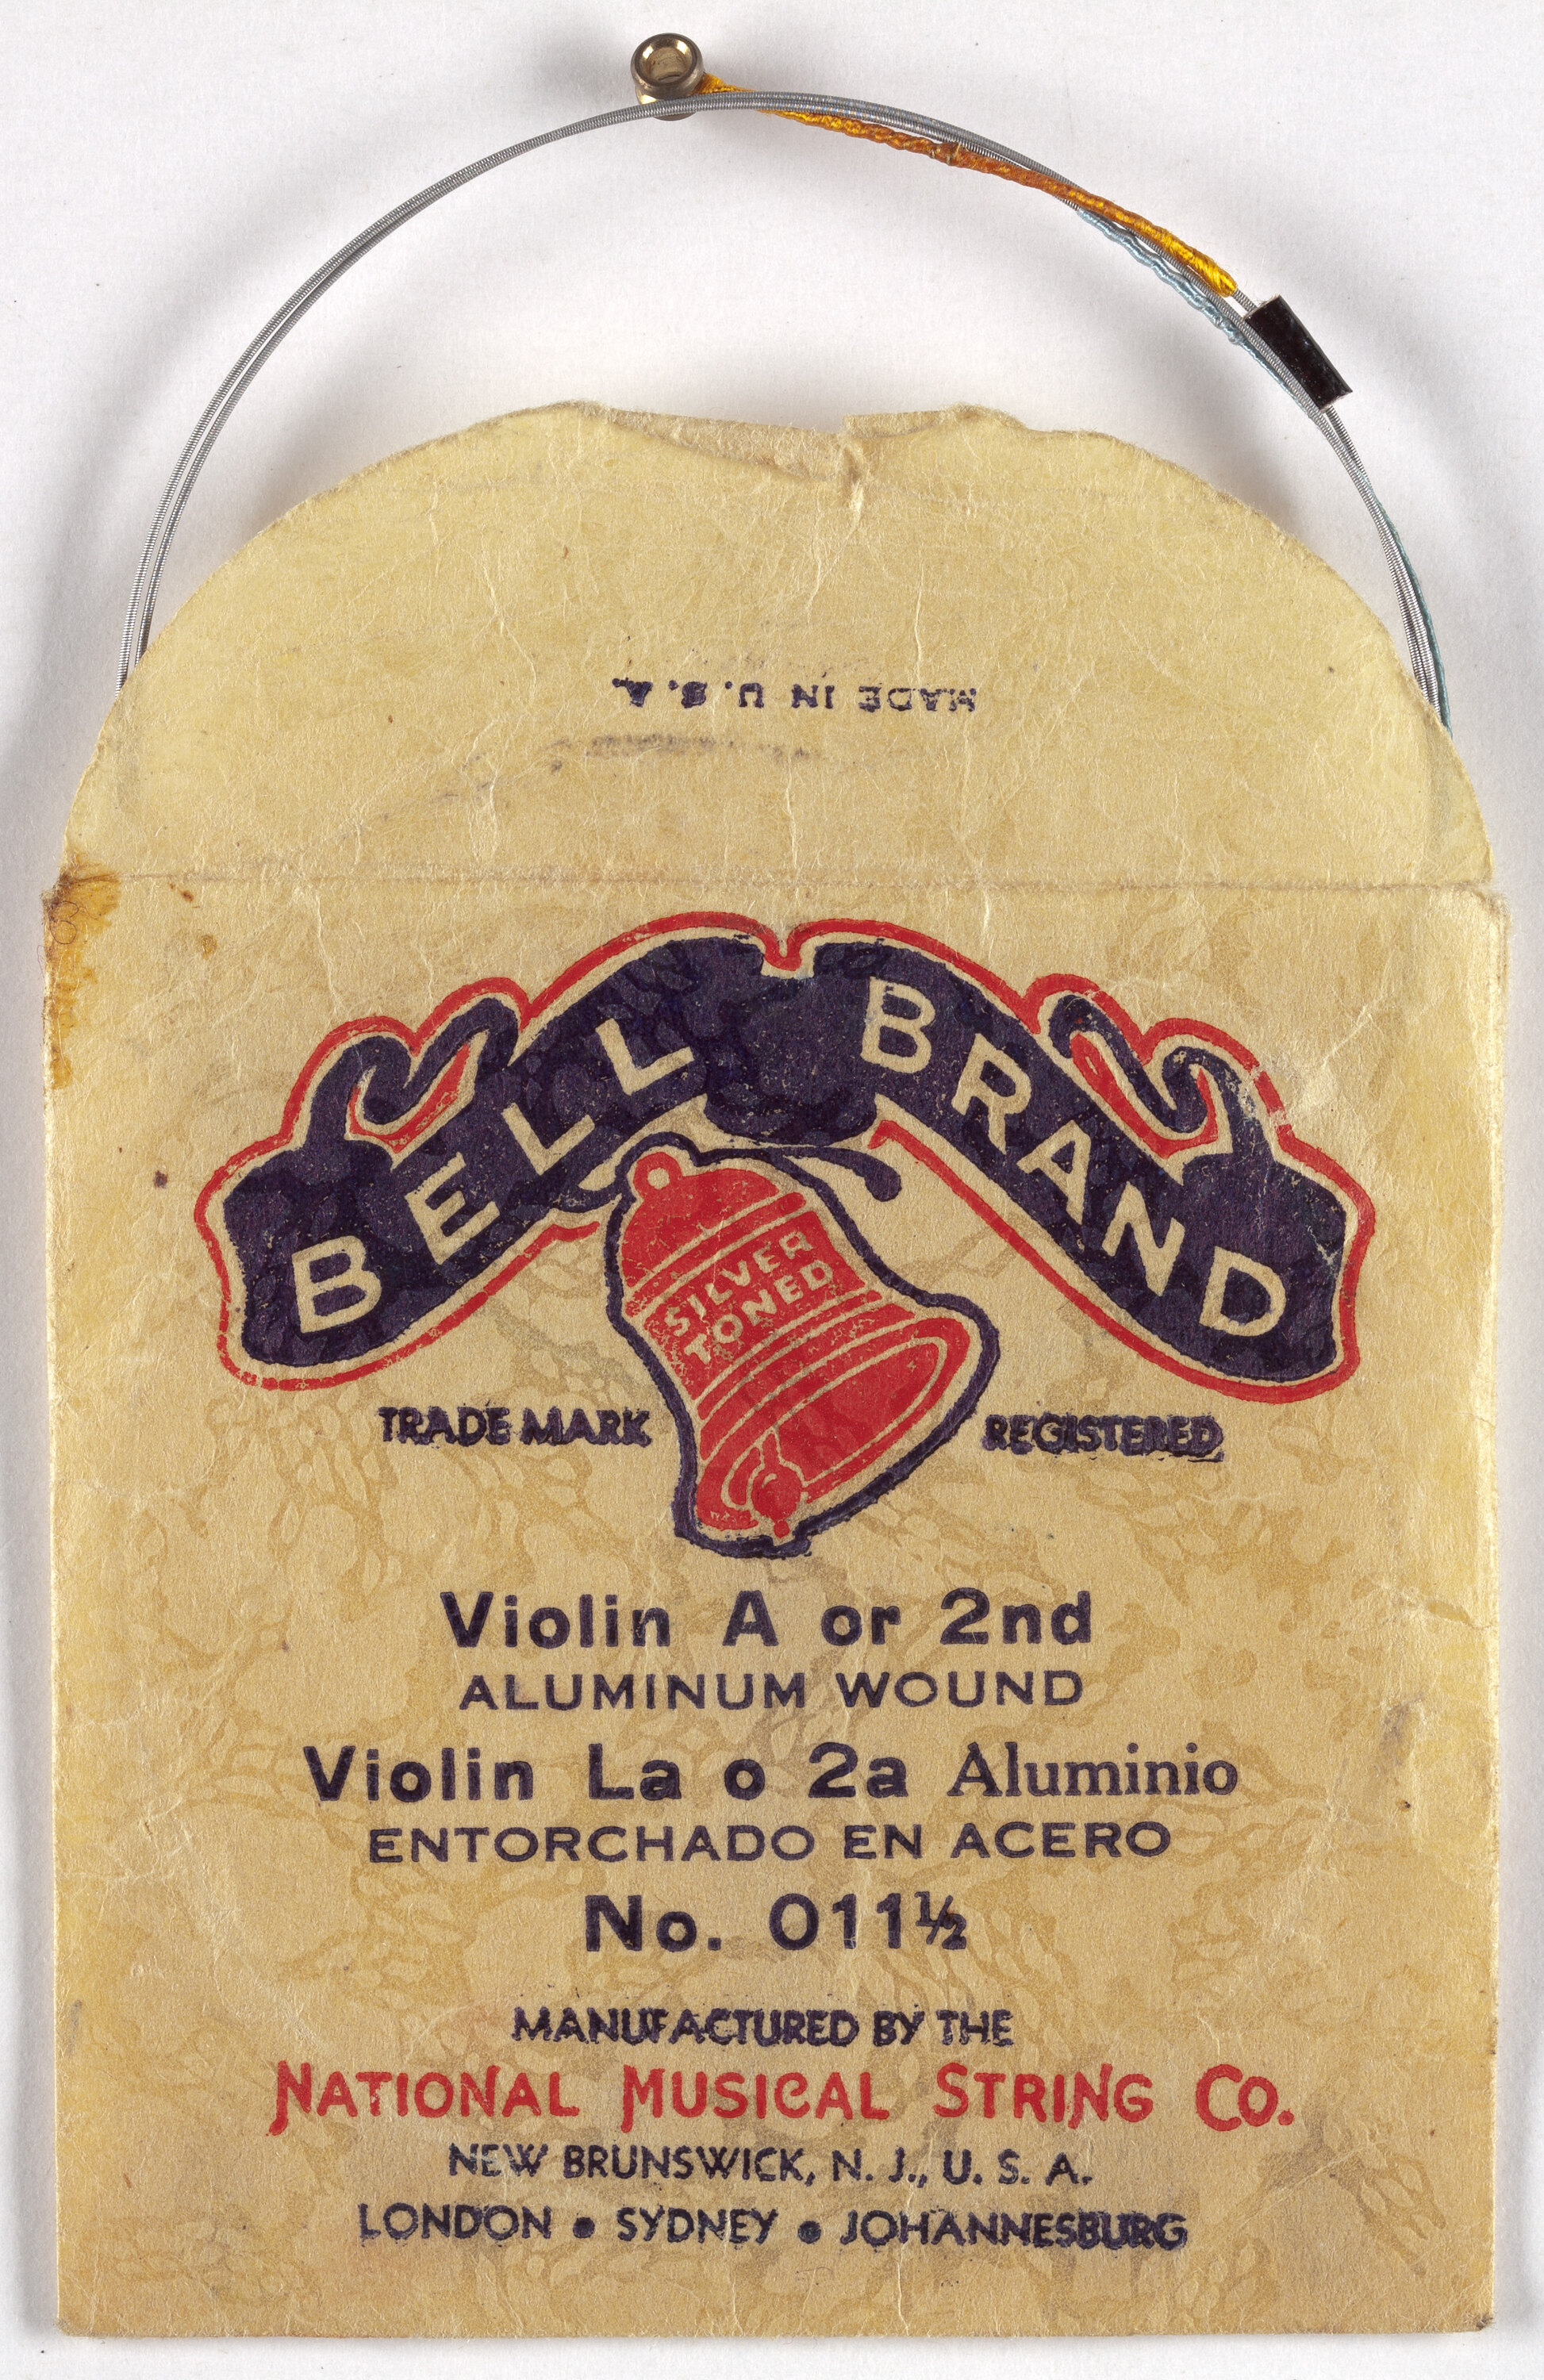 violin strings brands